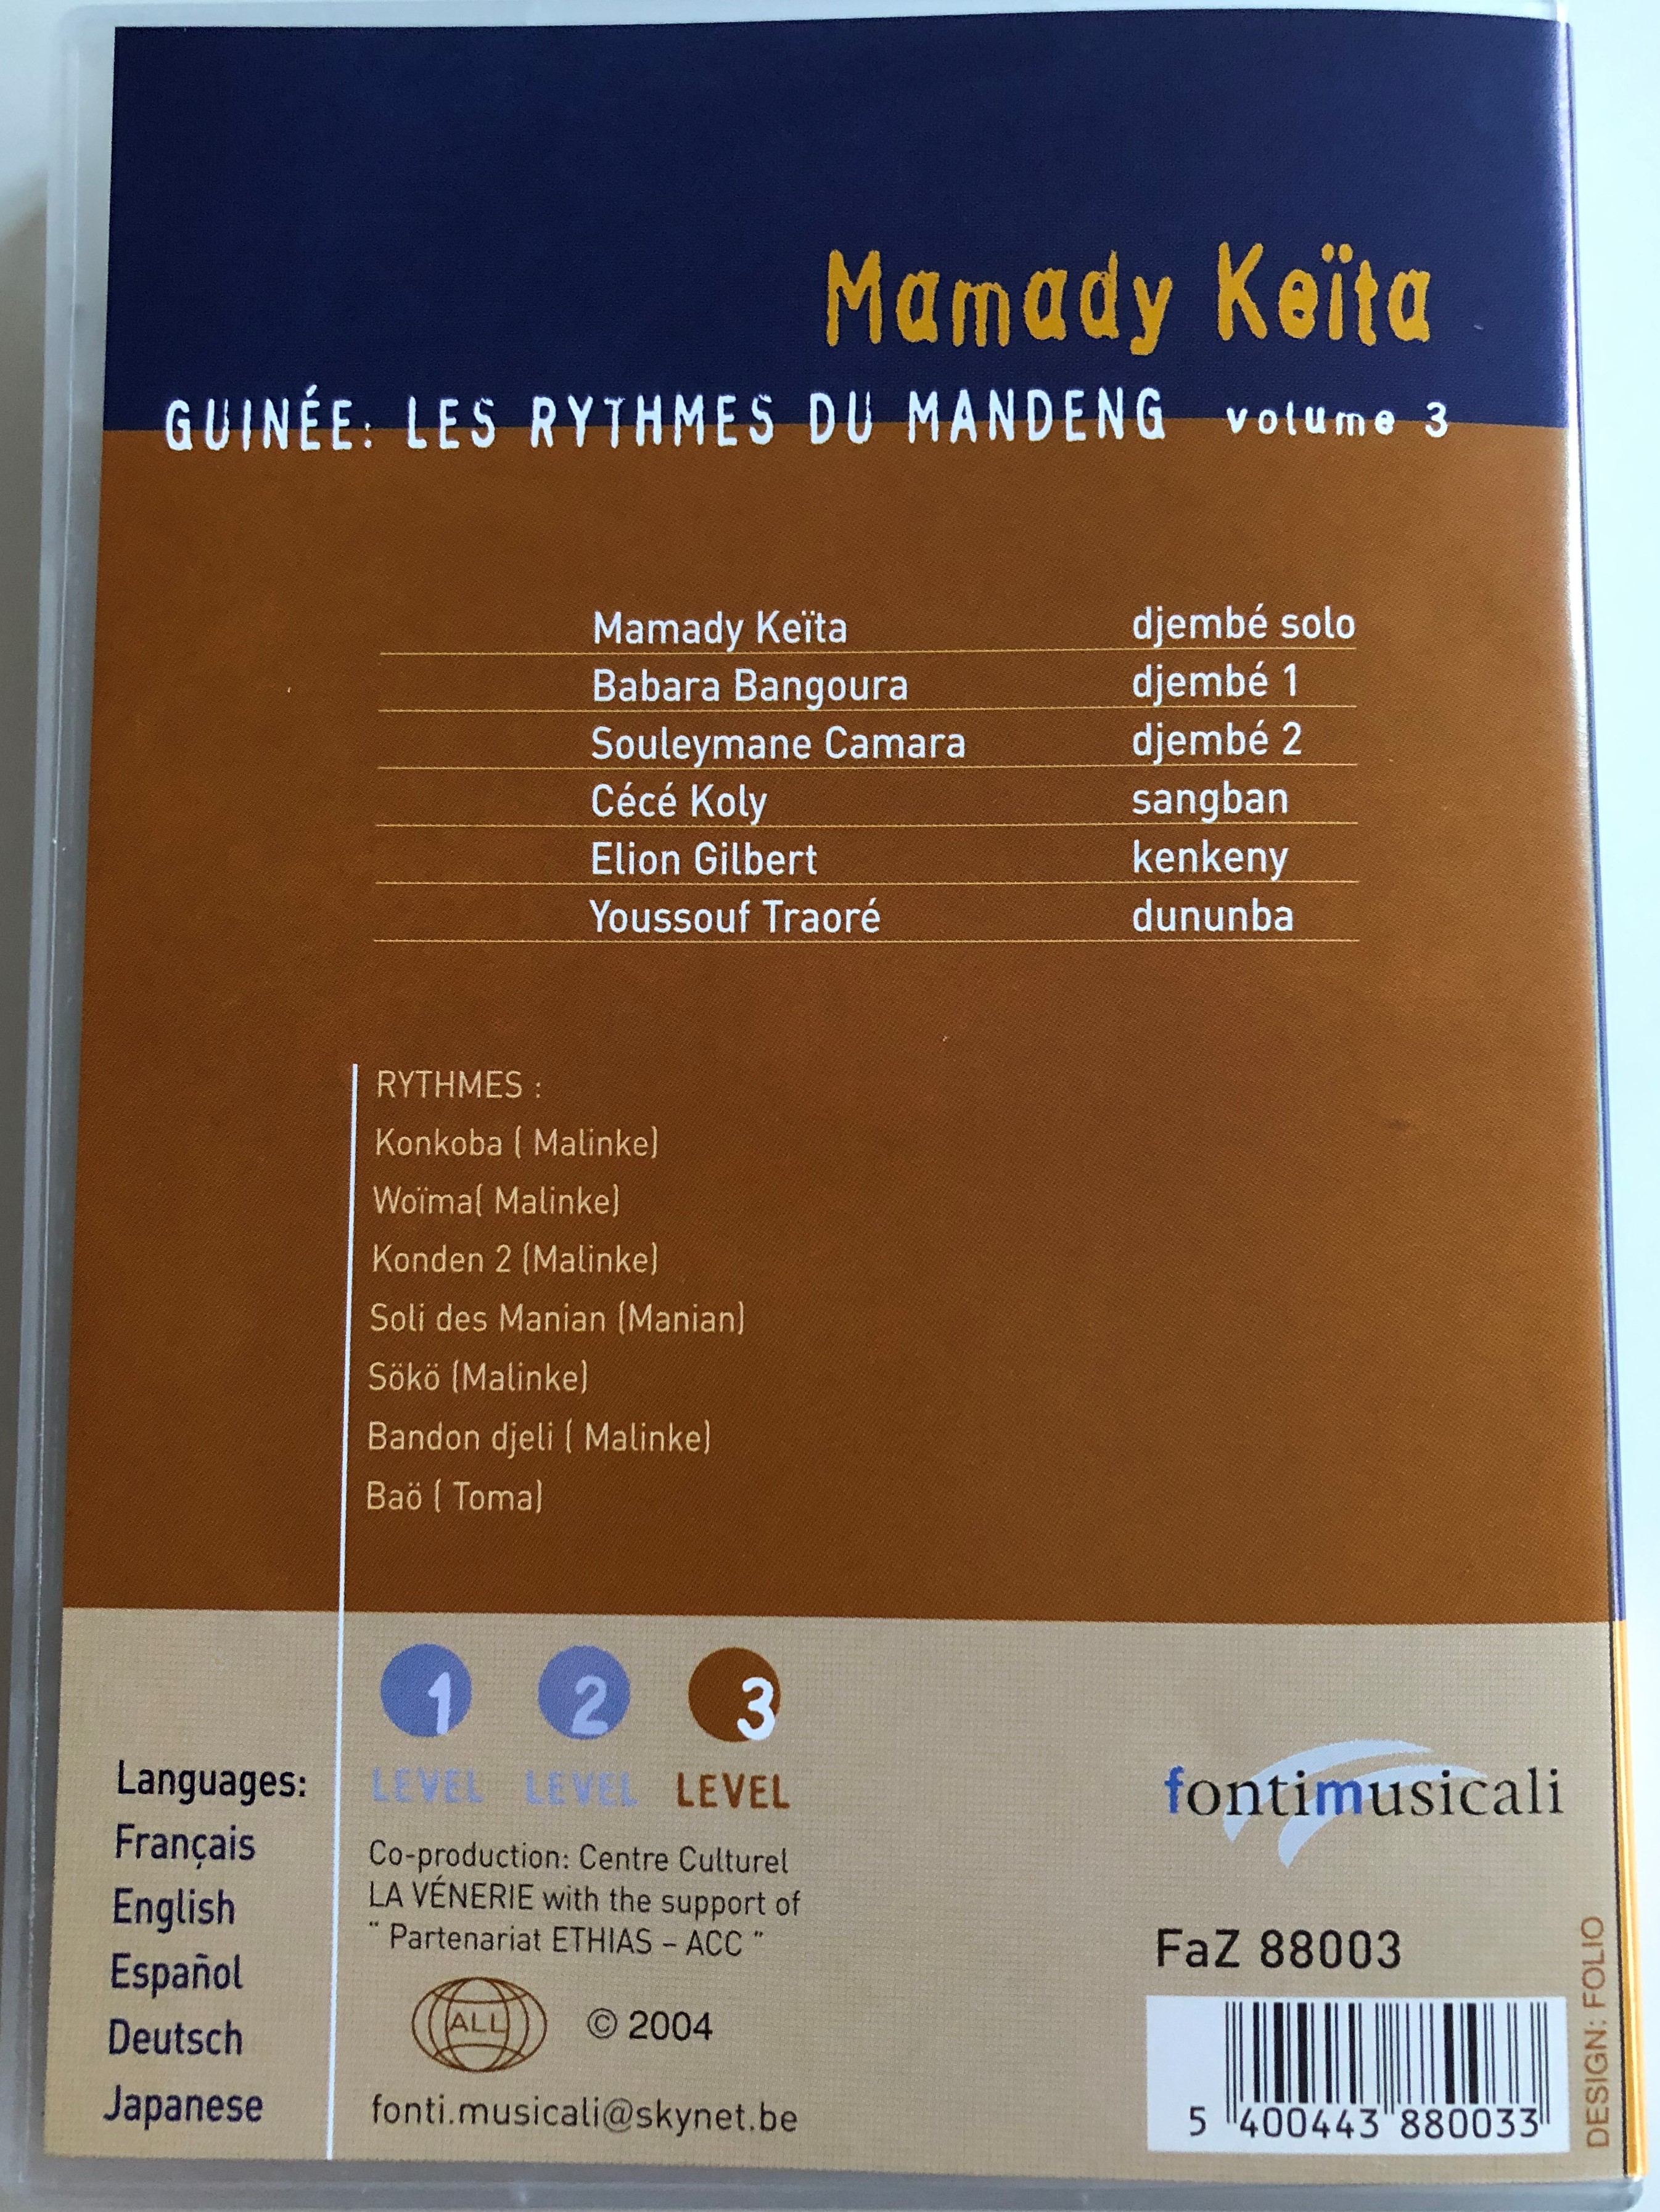 Mamady keita - Guinee Les Rythmes du Mandeng 1.JPG